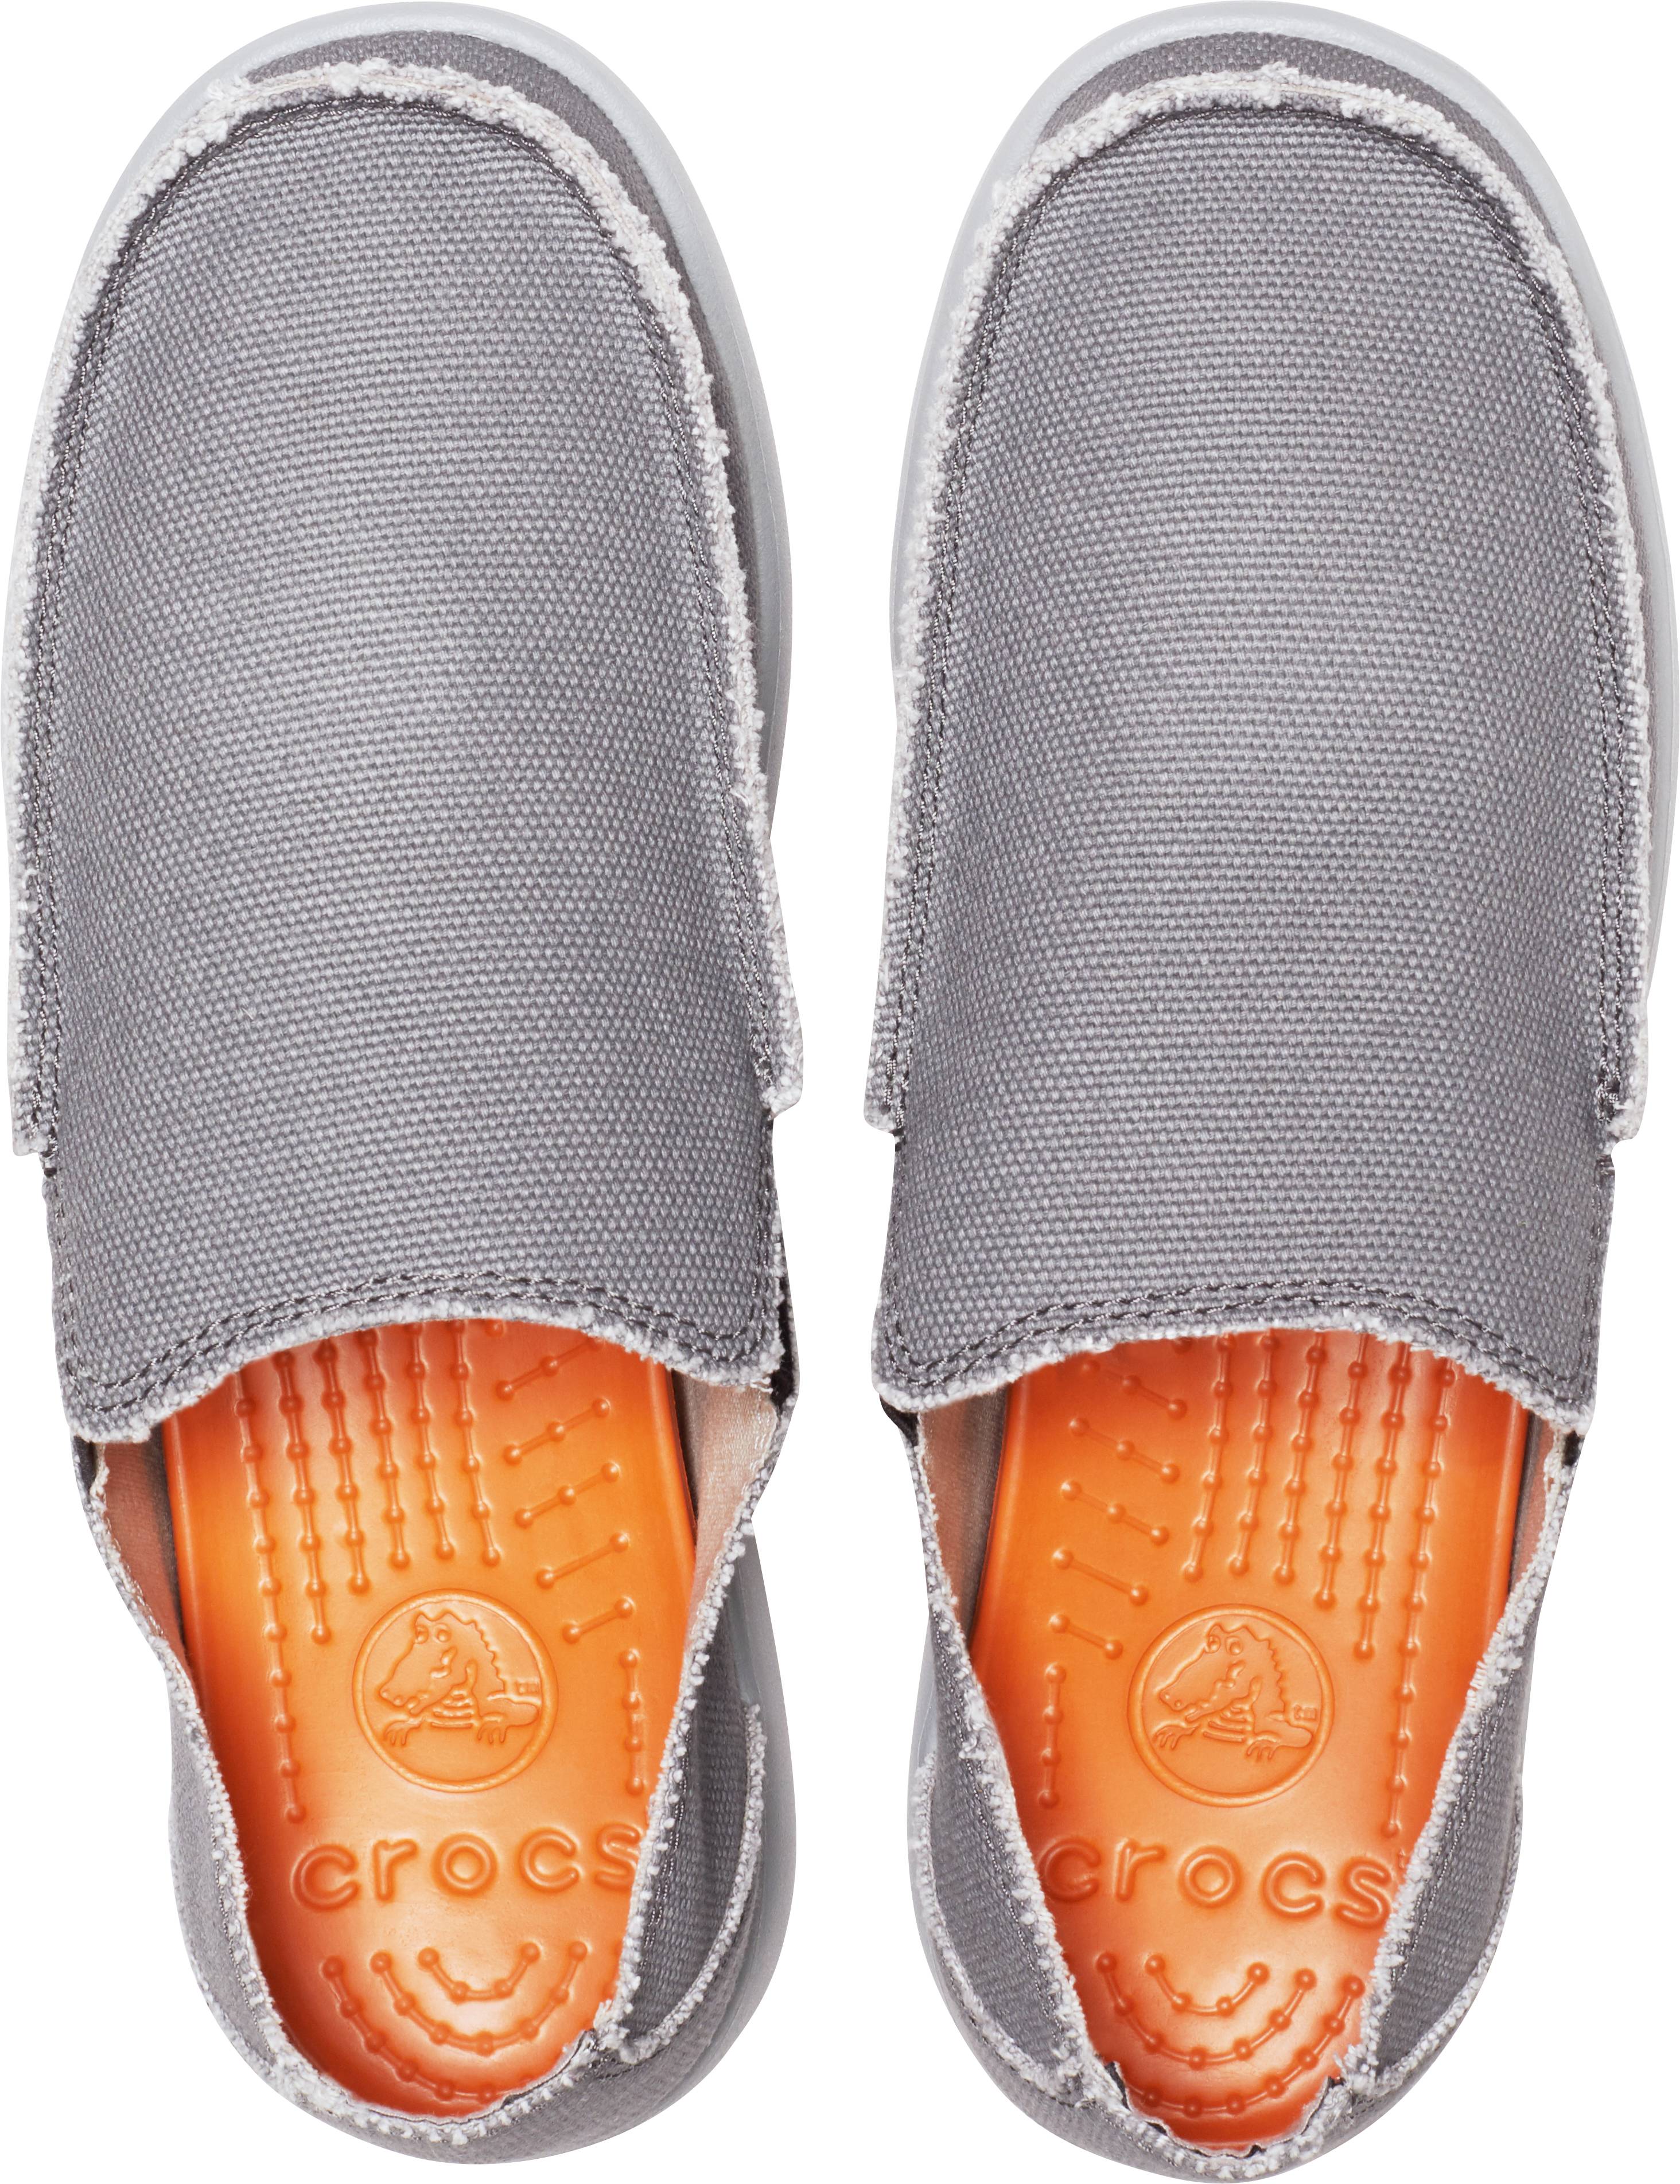 Crocs Men's Santa Cruz Slip on Loafers - image 4 of 6